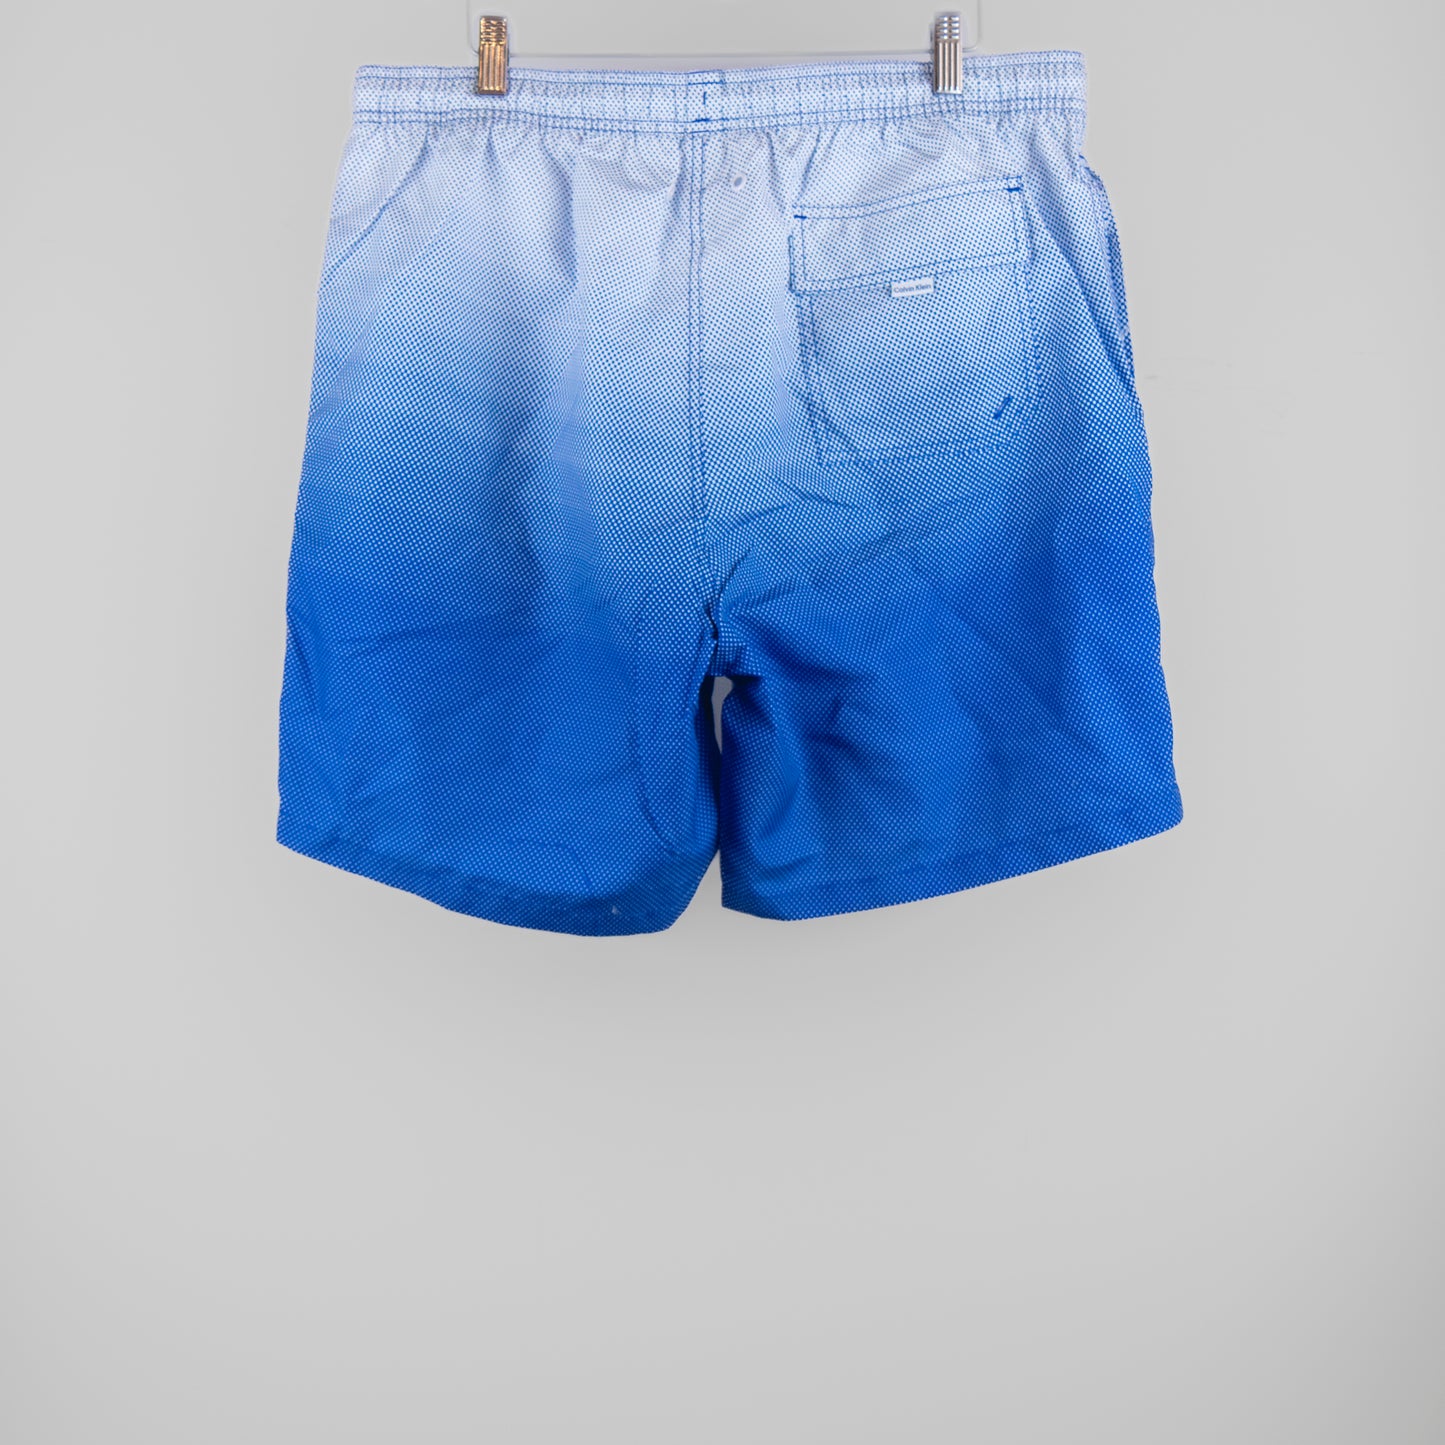 Calvin Klein - Standard UV Protected Quick Dry Swim Trunk - Blue